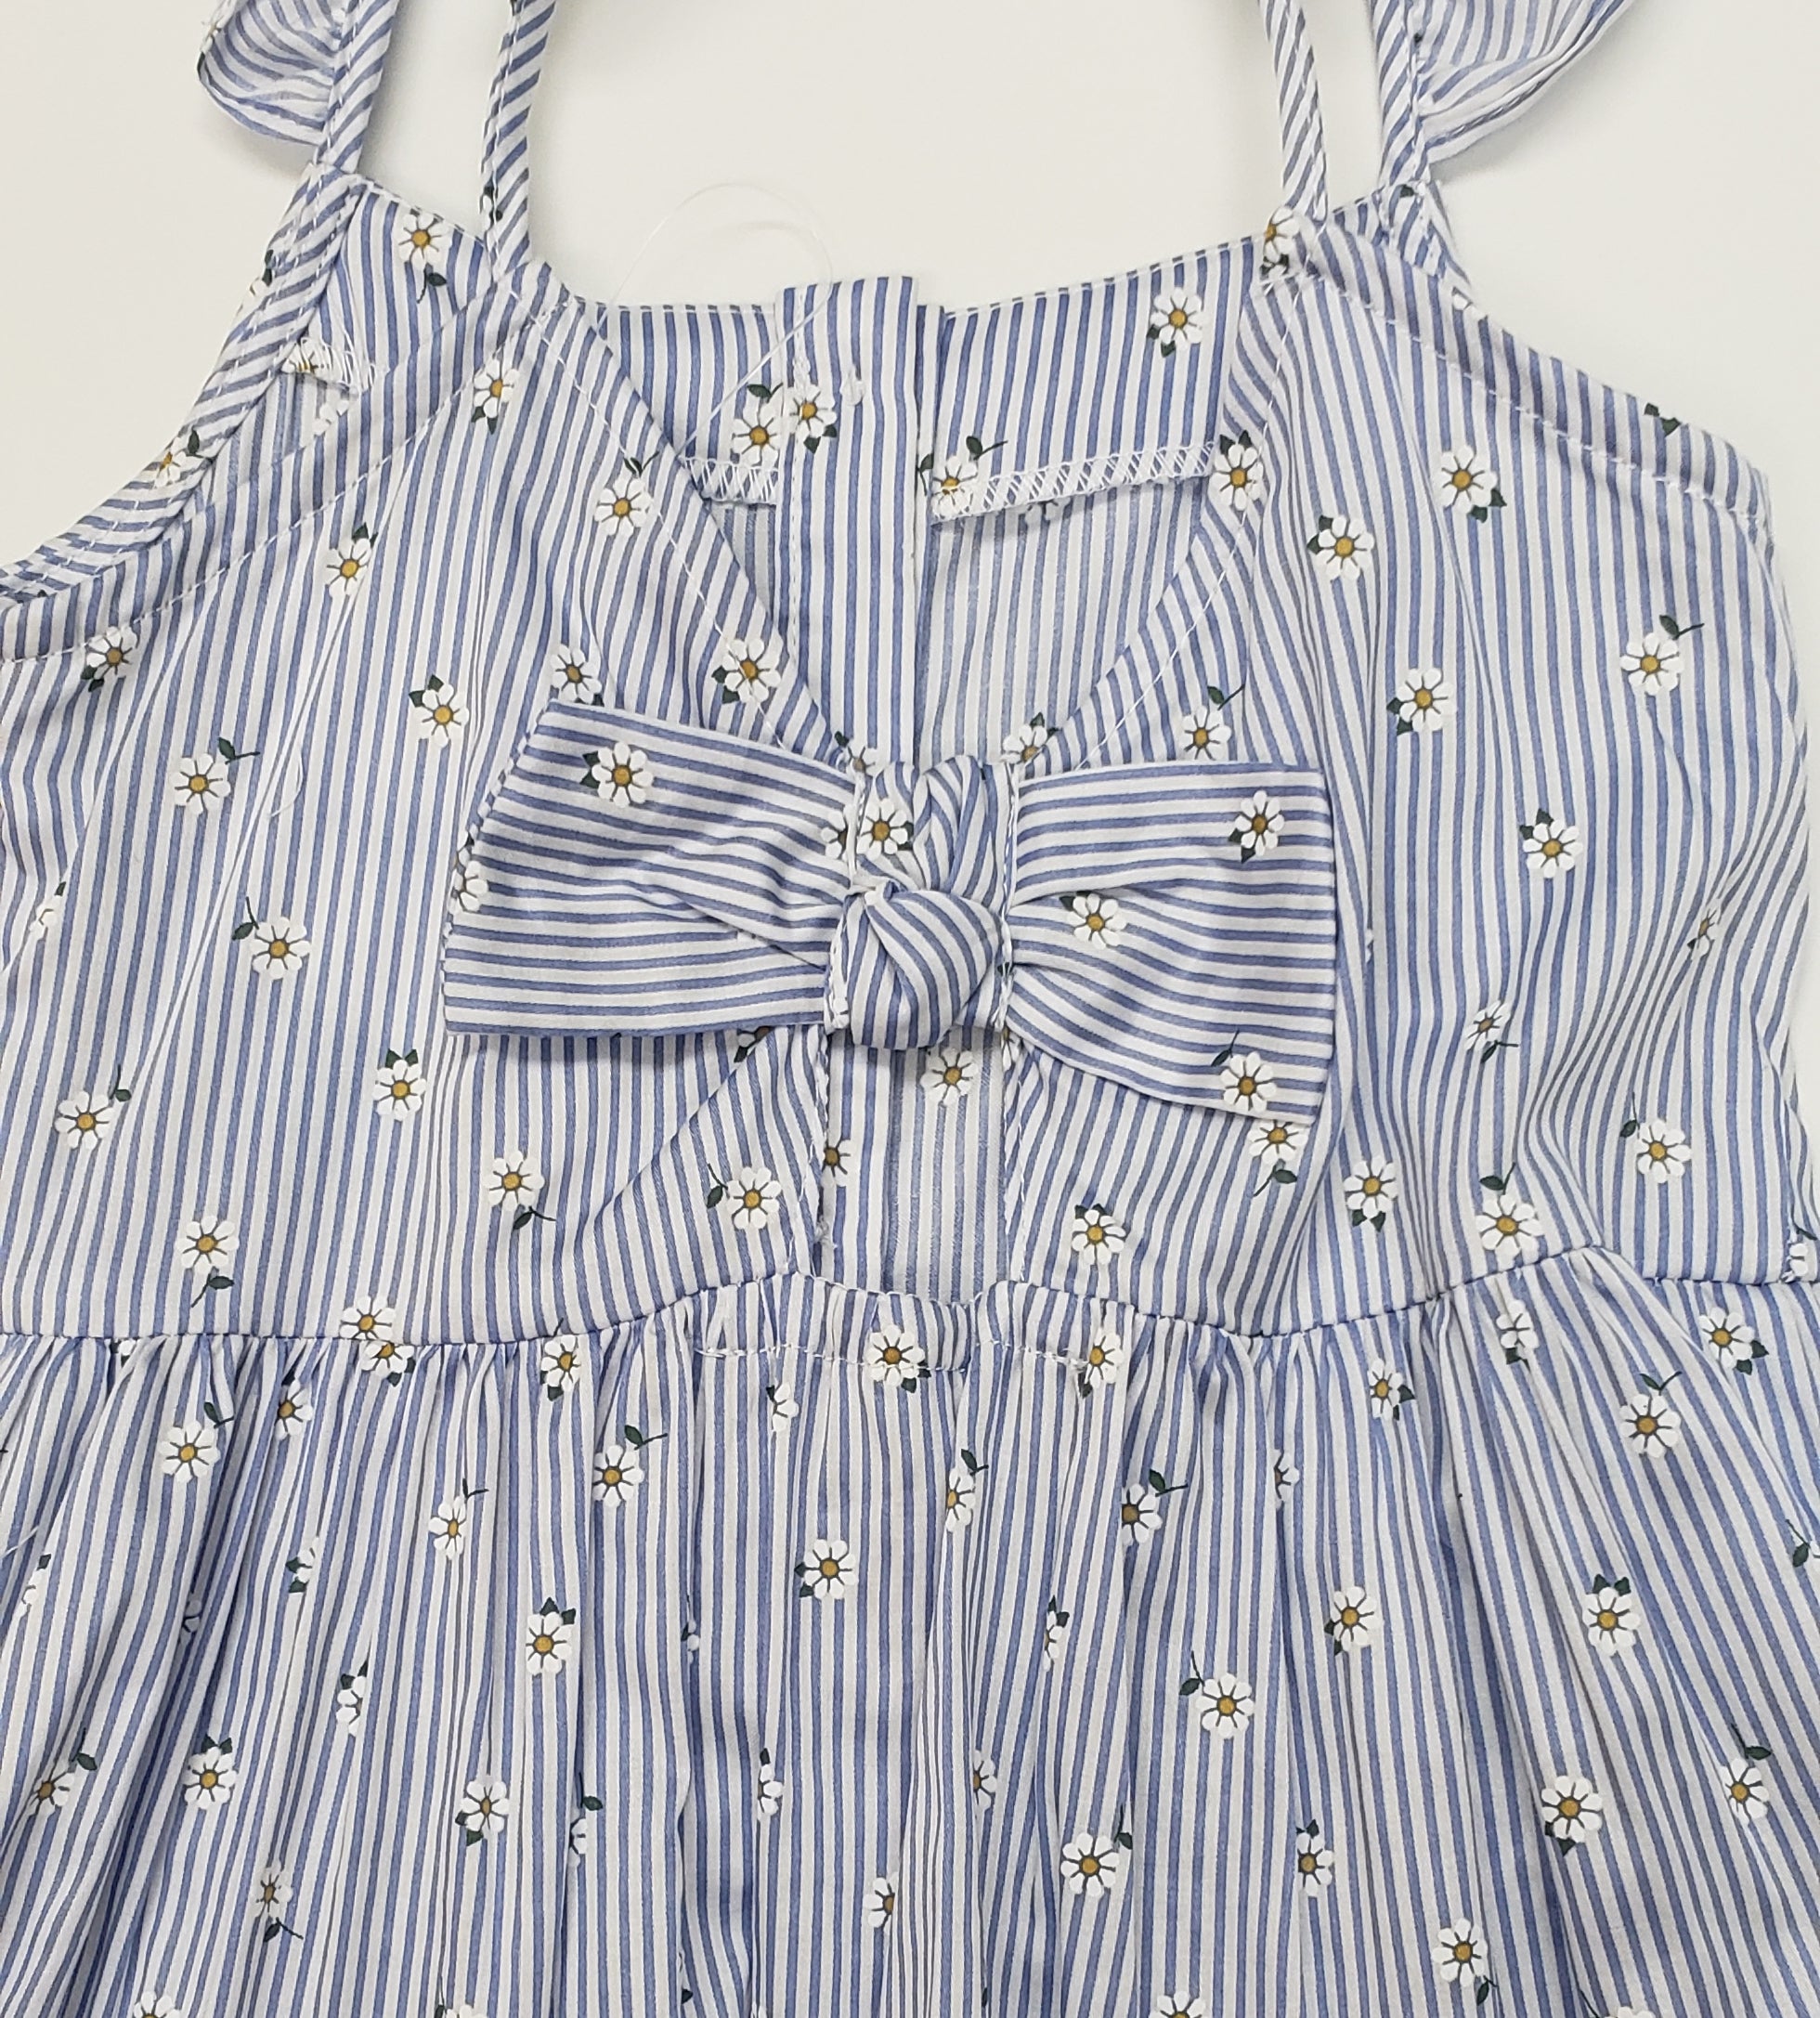 Girls floral/striped dress